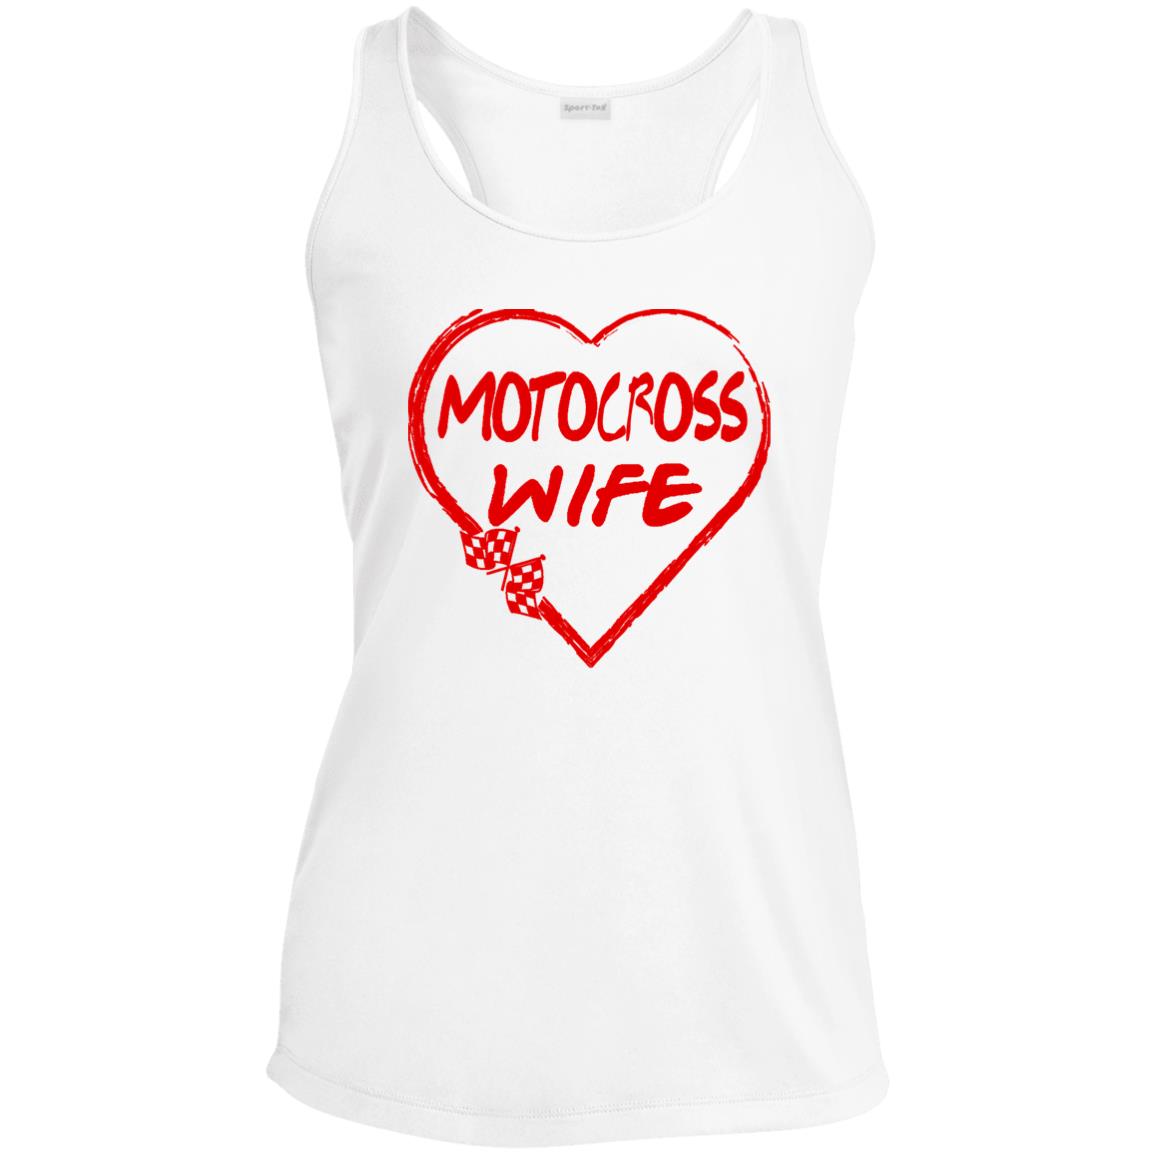 Motocross Wife Ladies' Performance Racerback Tank